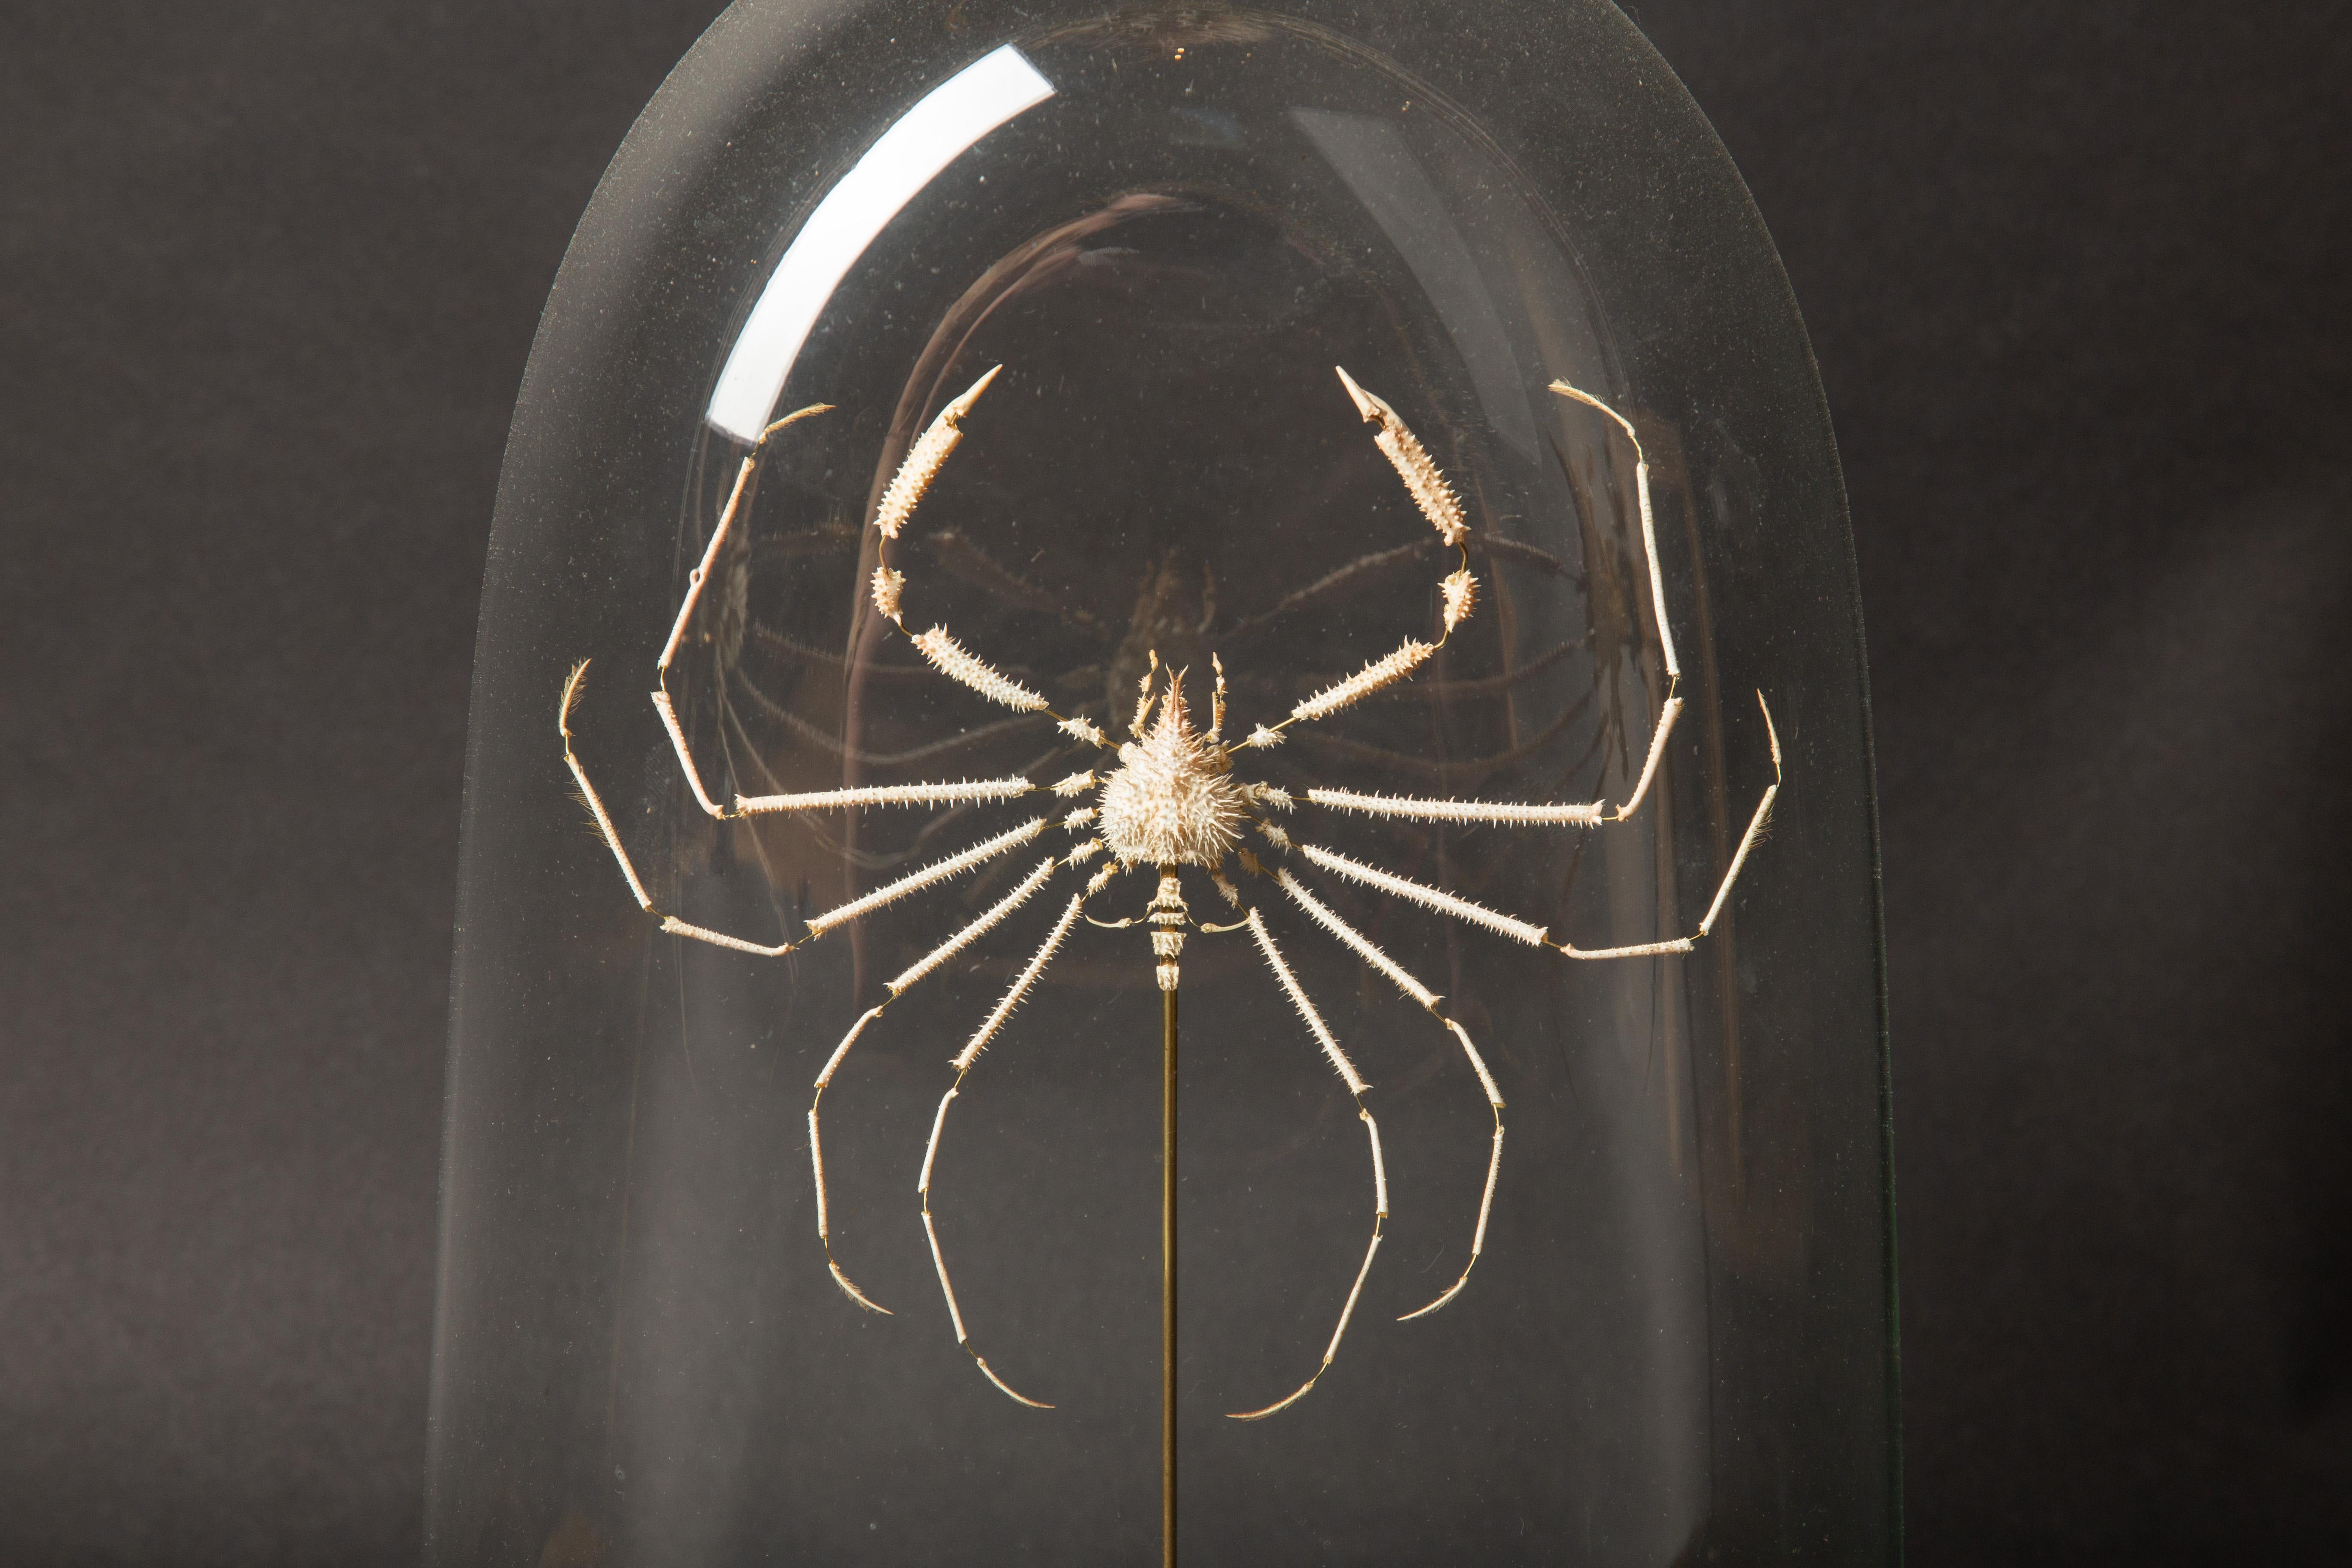 Other Rare Deep Sea Deconstructed Spider Crab (Pleistacantha Moseleyi) Specimen